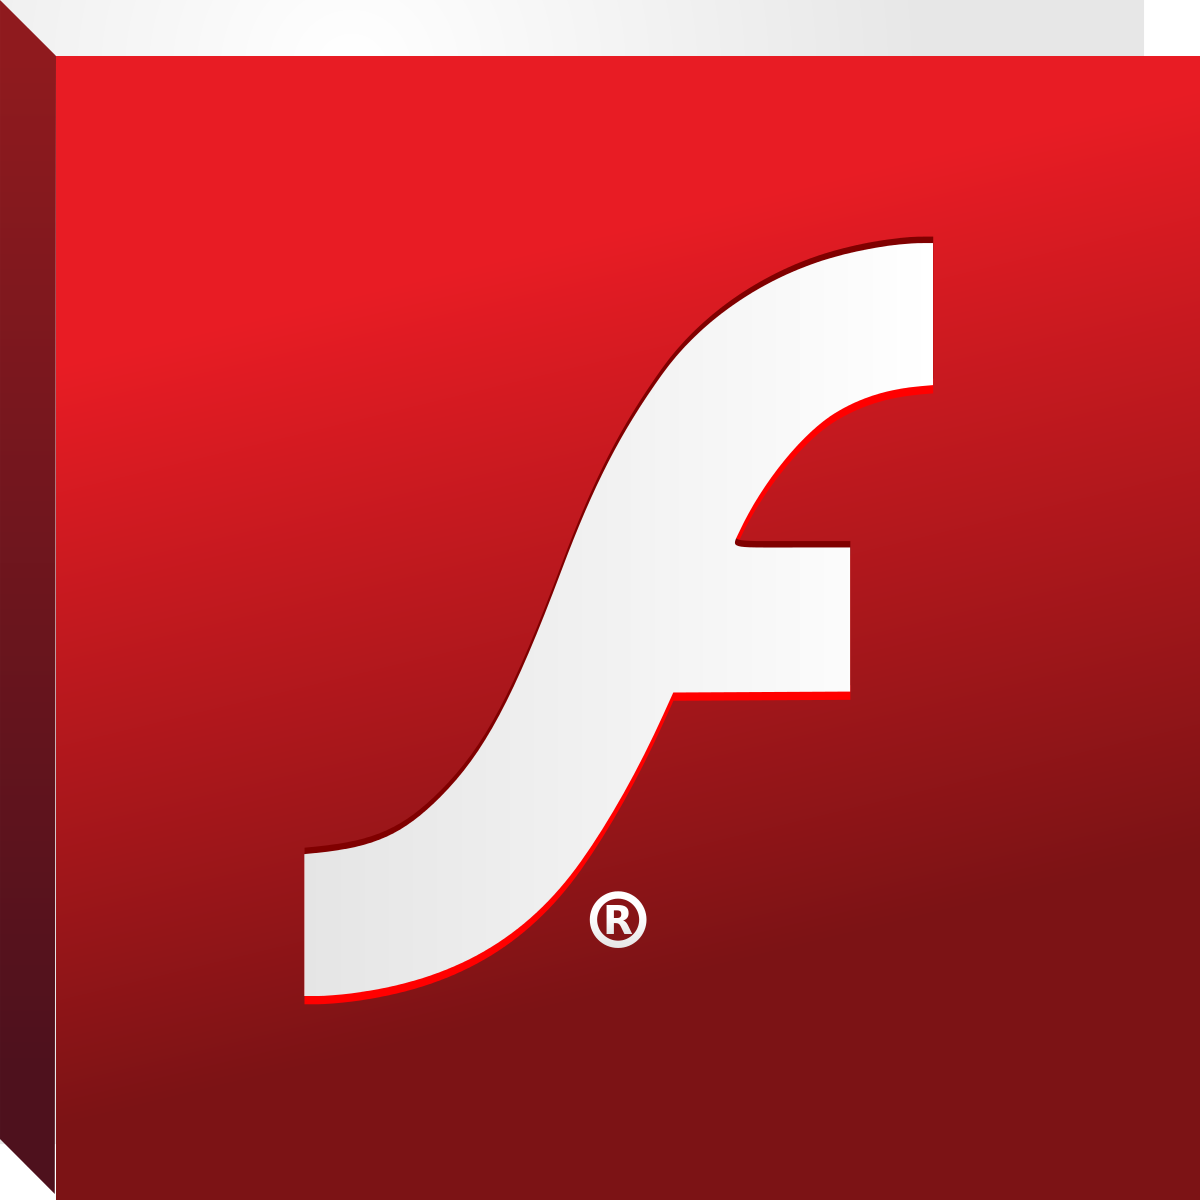 Adobe Flash Player 32.0.0.465